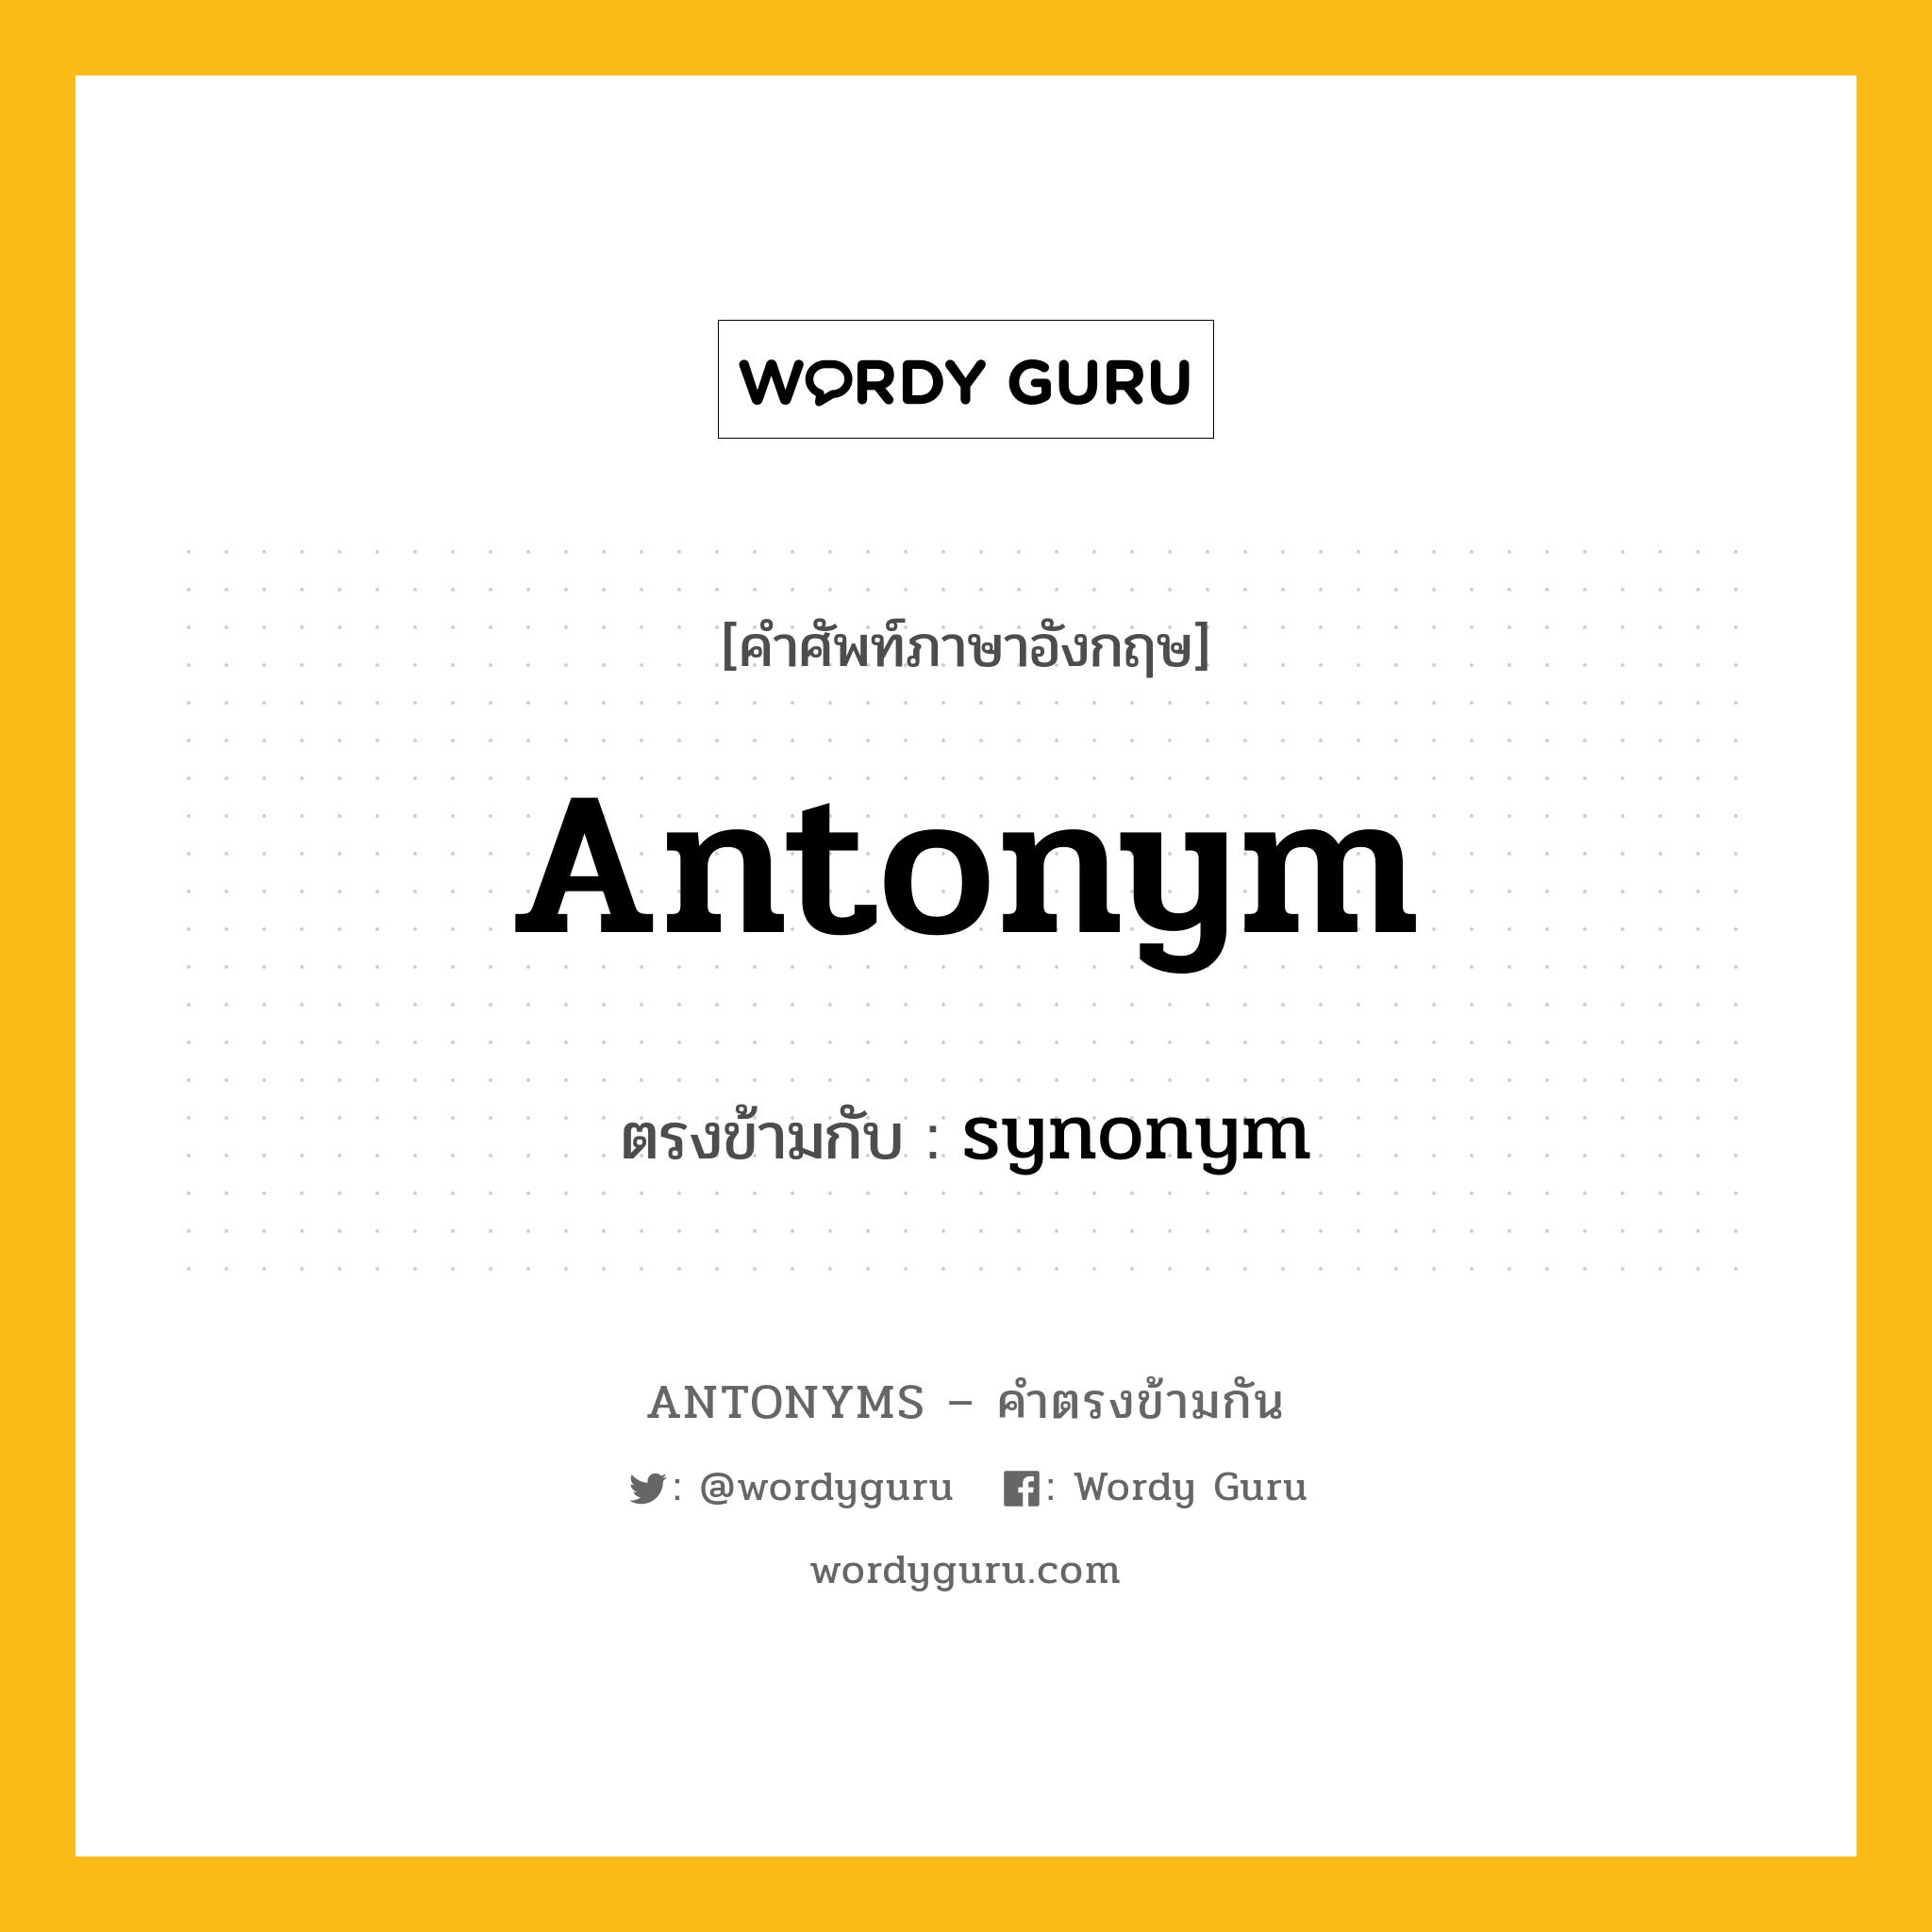 antonym เป็นคำตรงข้ามกับคำไหนบ้าง?, คำศัพท์ภาษาอังกฤษ antonym ตรงข้ามกับ synonym หมวด synonym